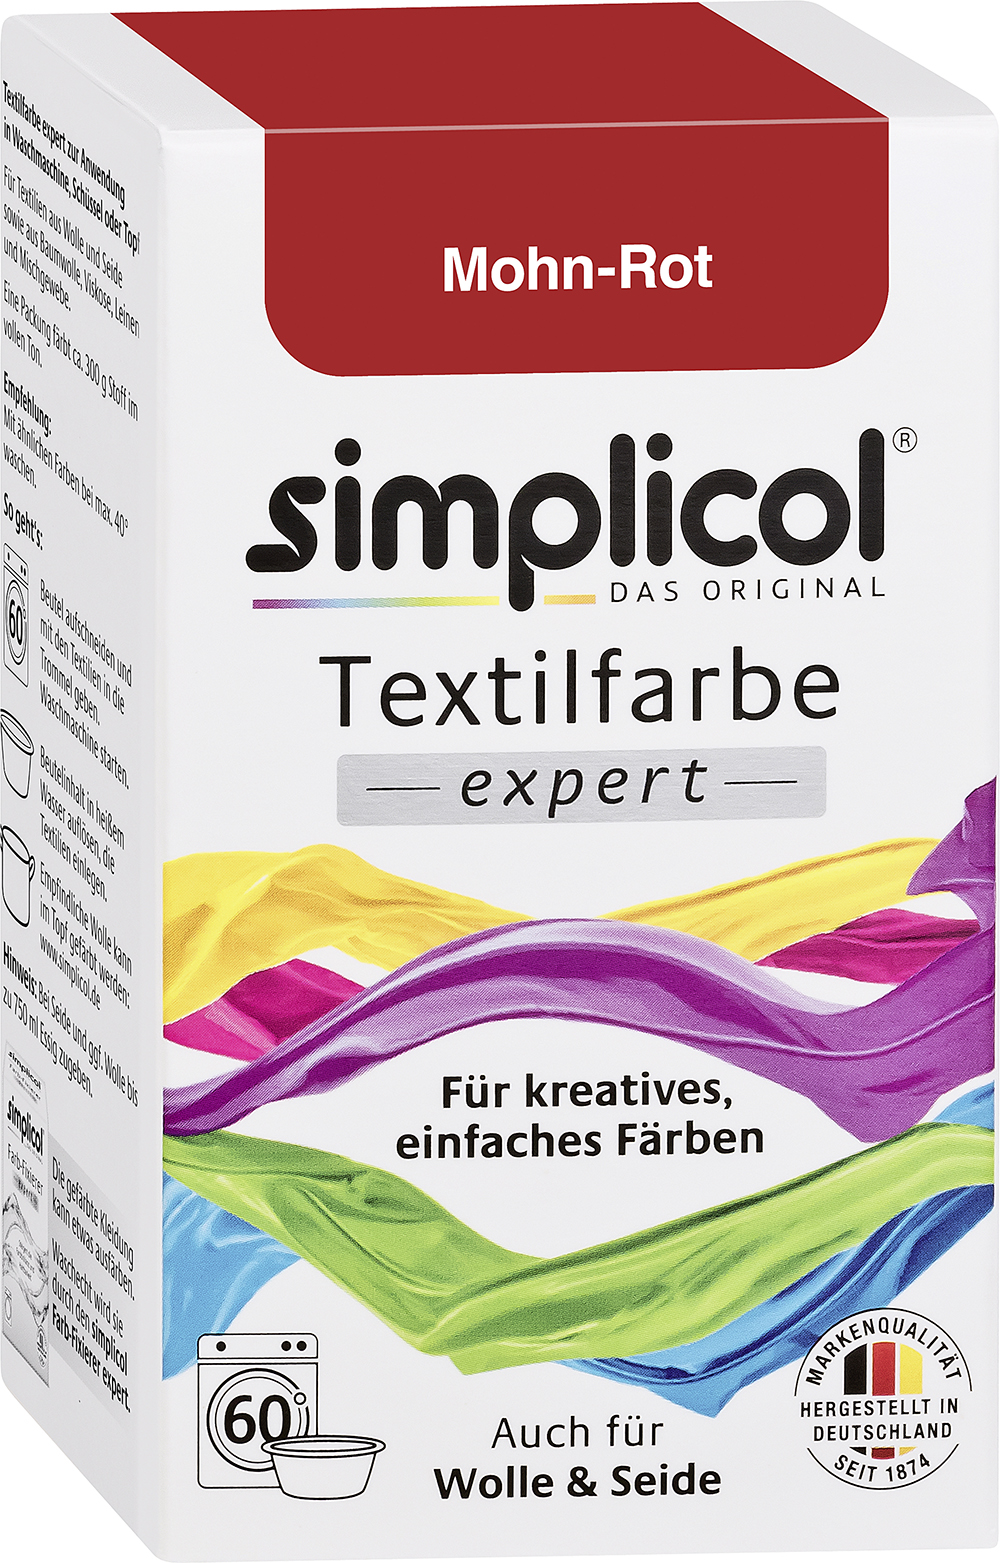 SIMPLICOL Textilfarbe Expert 150g mohnrot